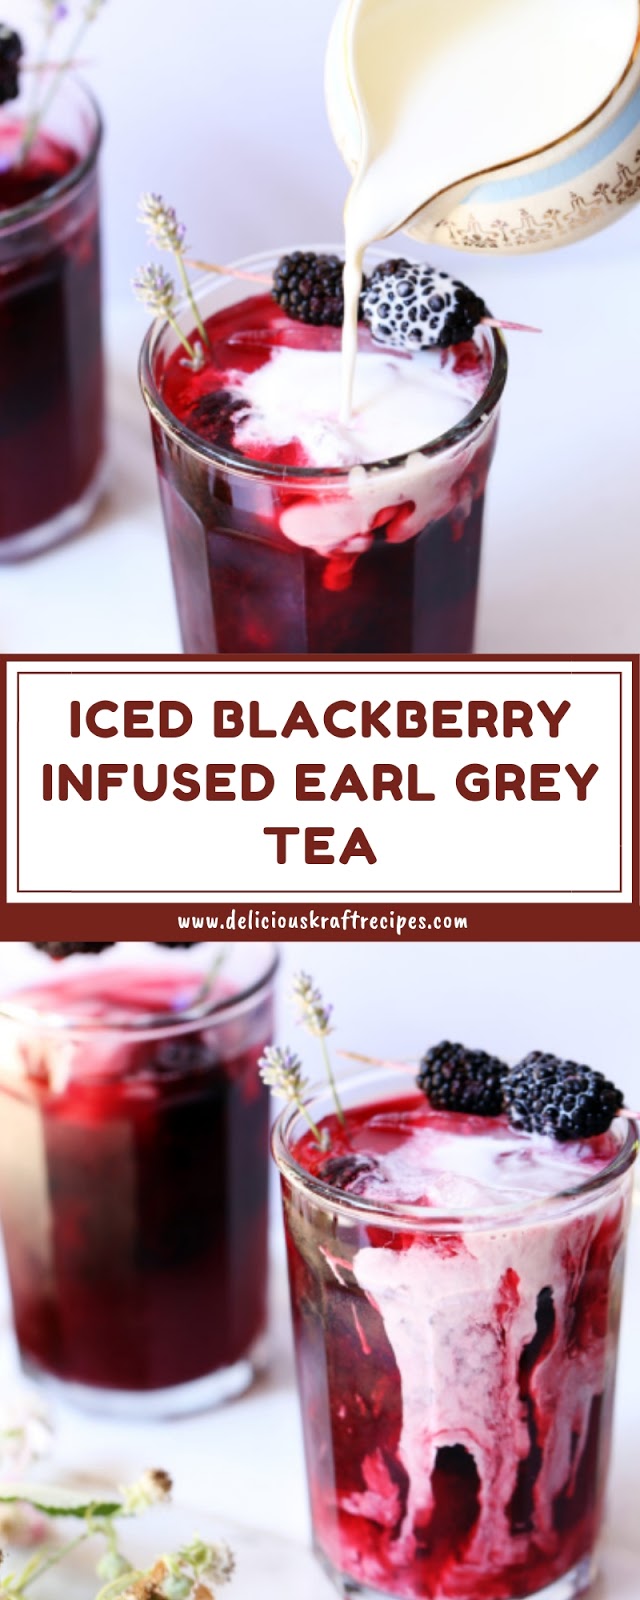 ICED BLACKBERRY INFUSED EARL GREY TEA